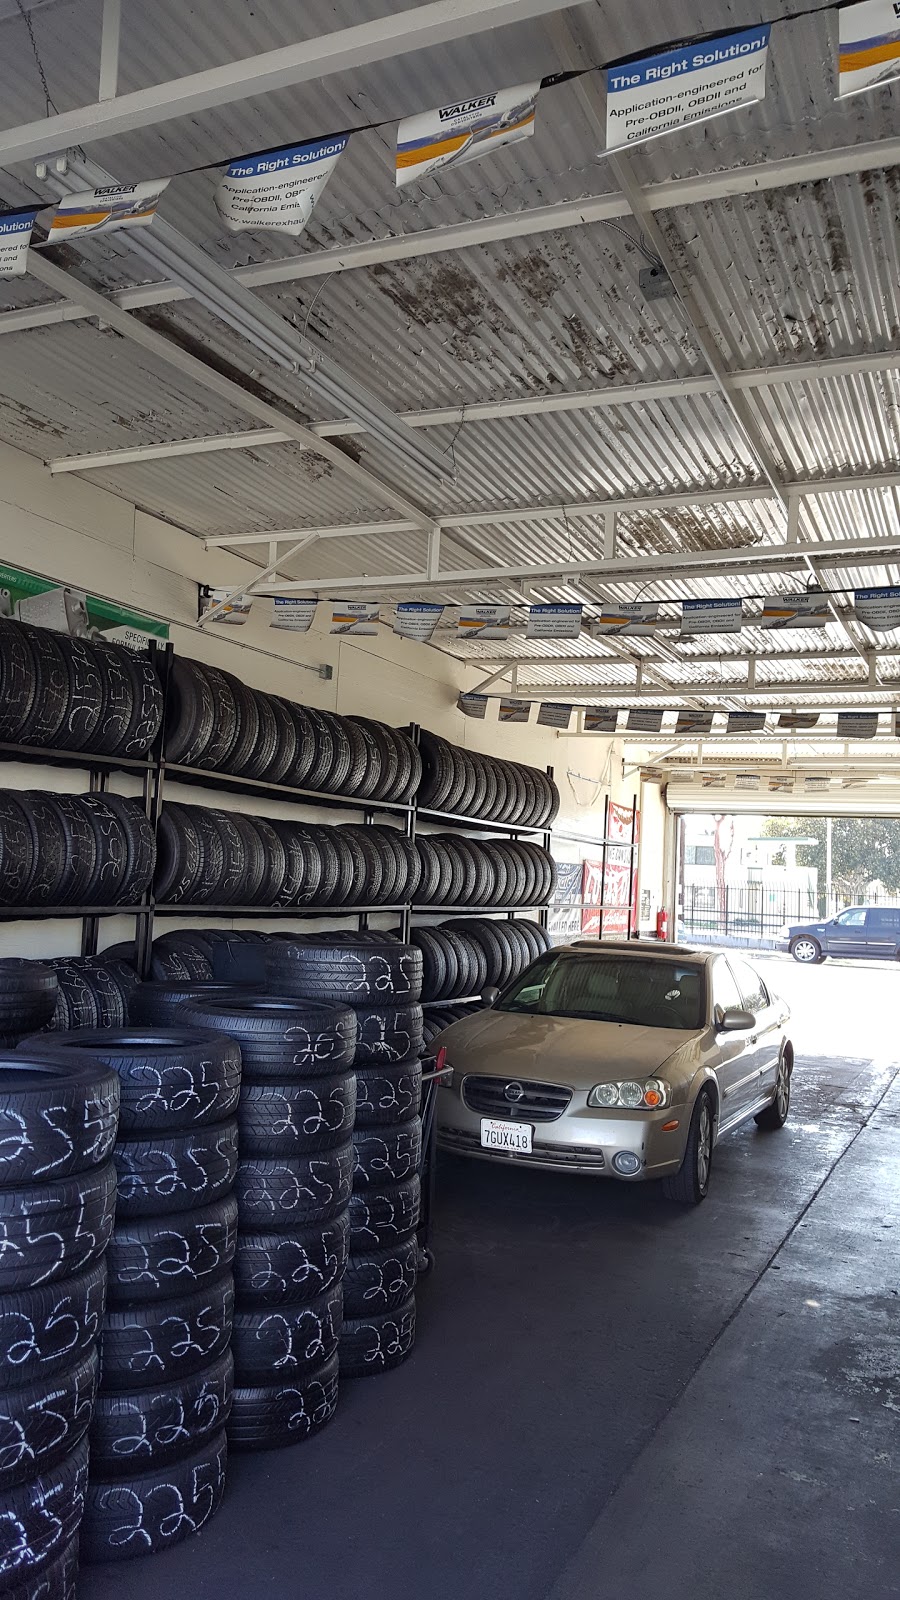 JJs main auto and Tire service | 3636 Main St, San Diego, CA 92113, USA | Phone: (619) 795-3555